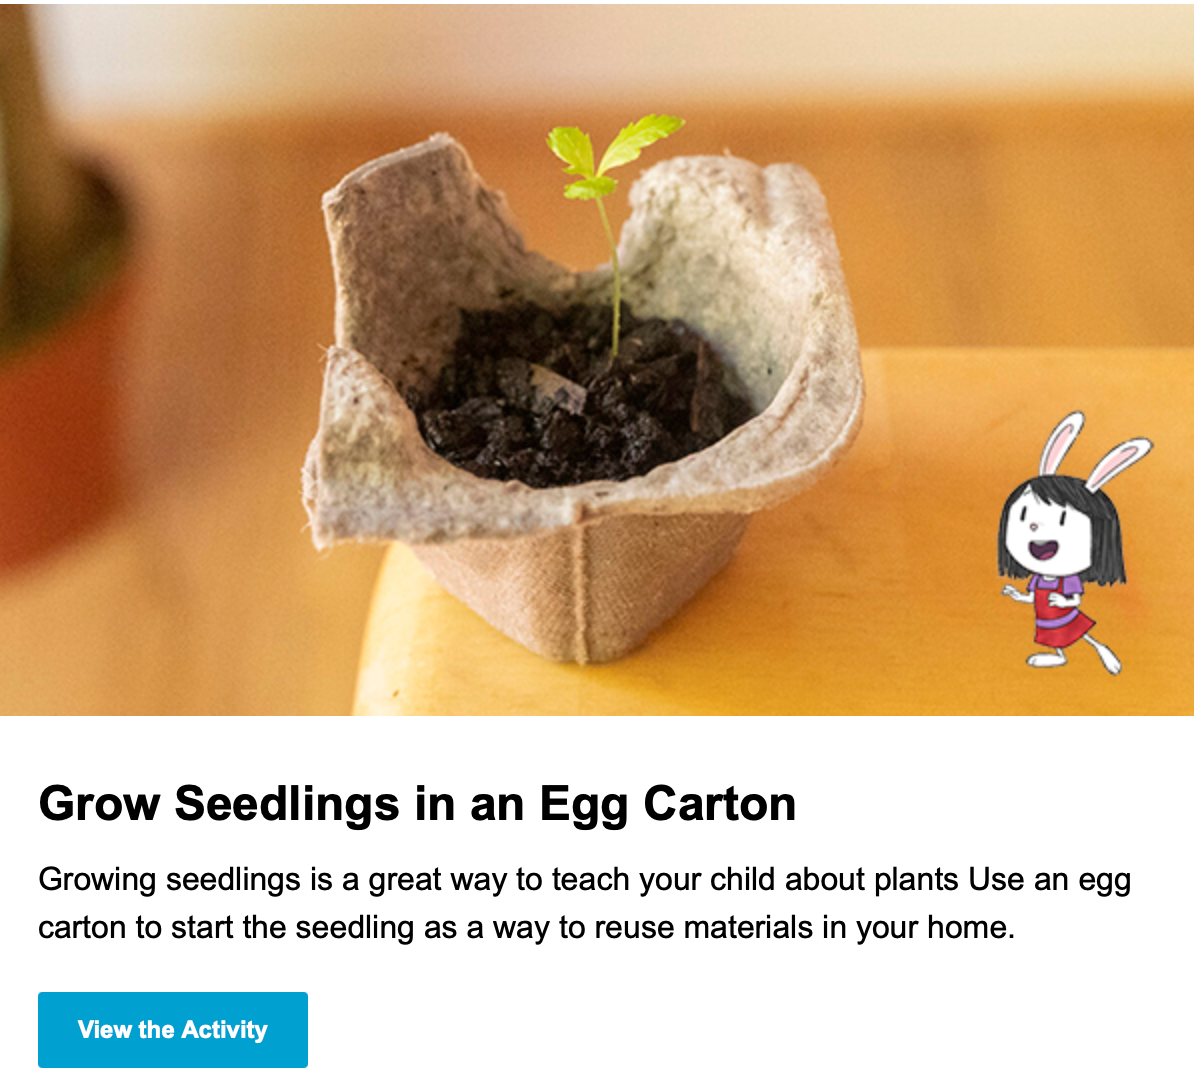 Grow Seedlings in an Egg Carton